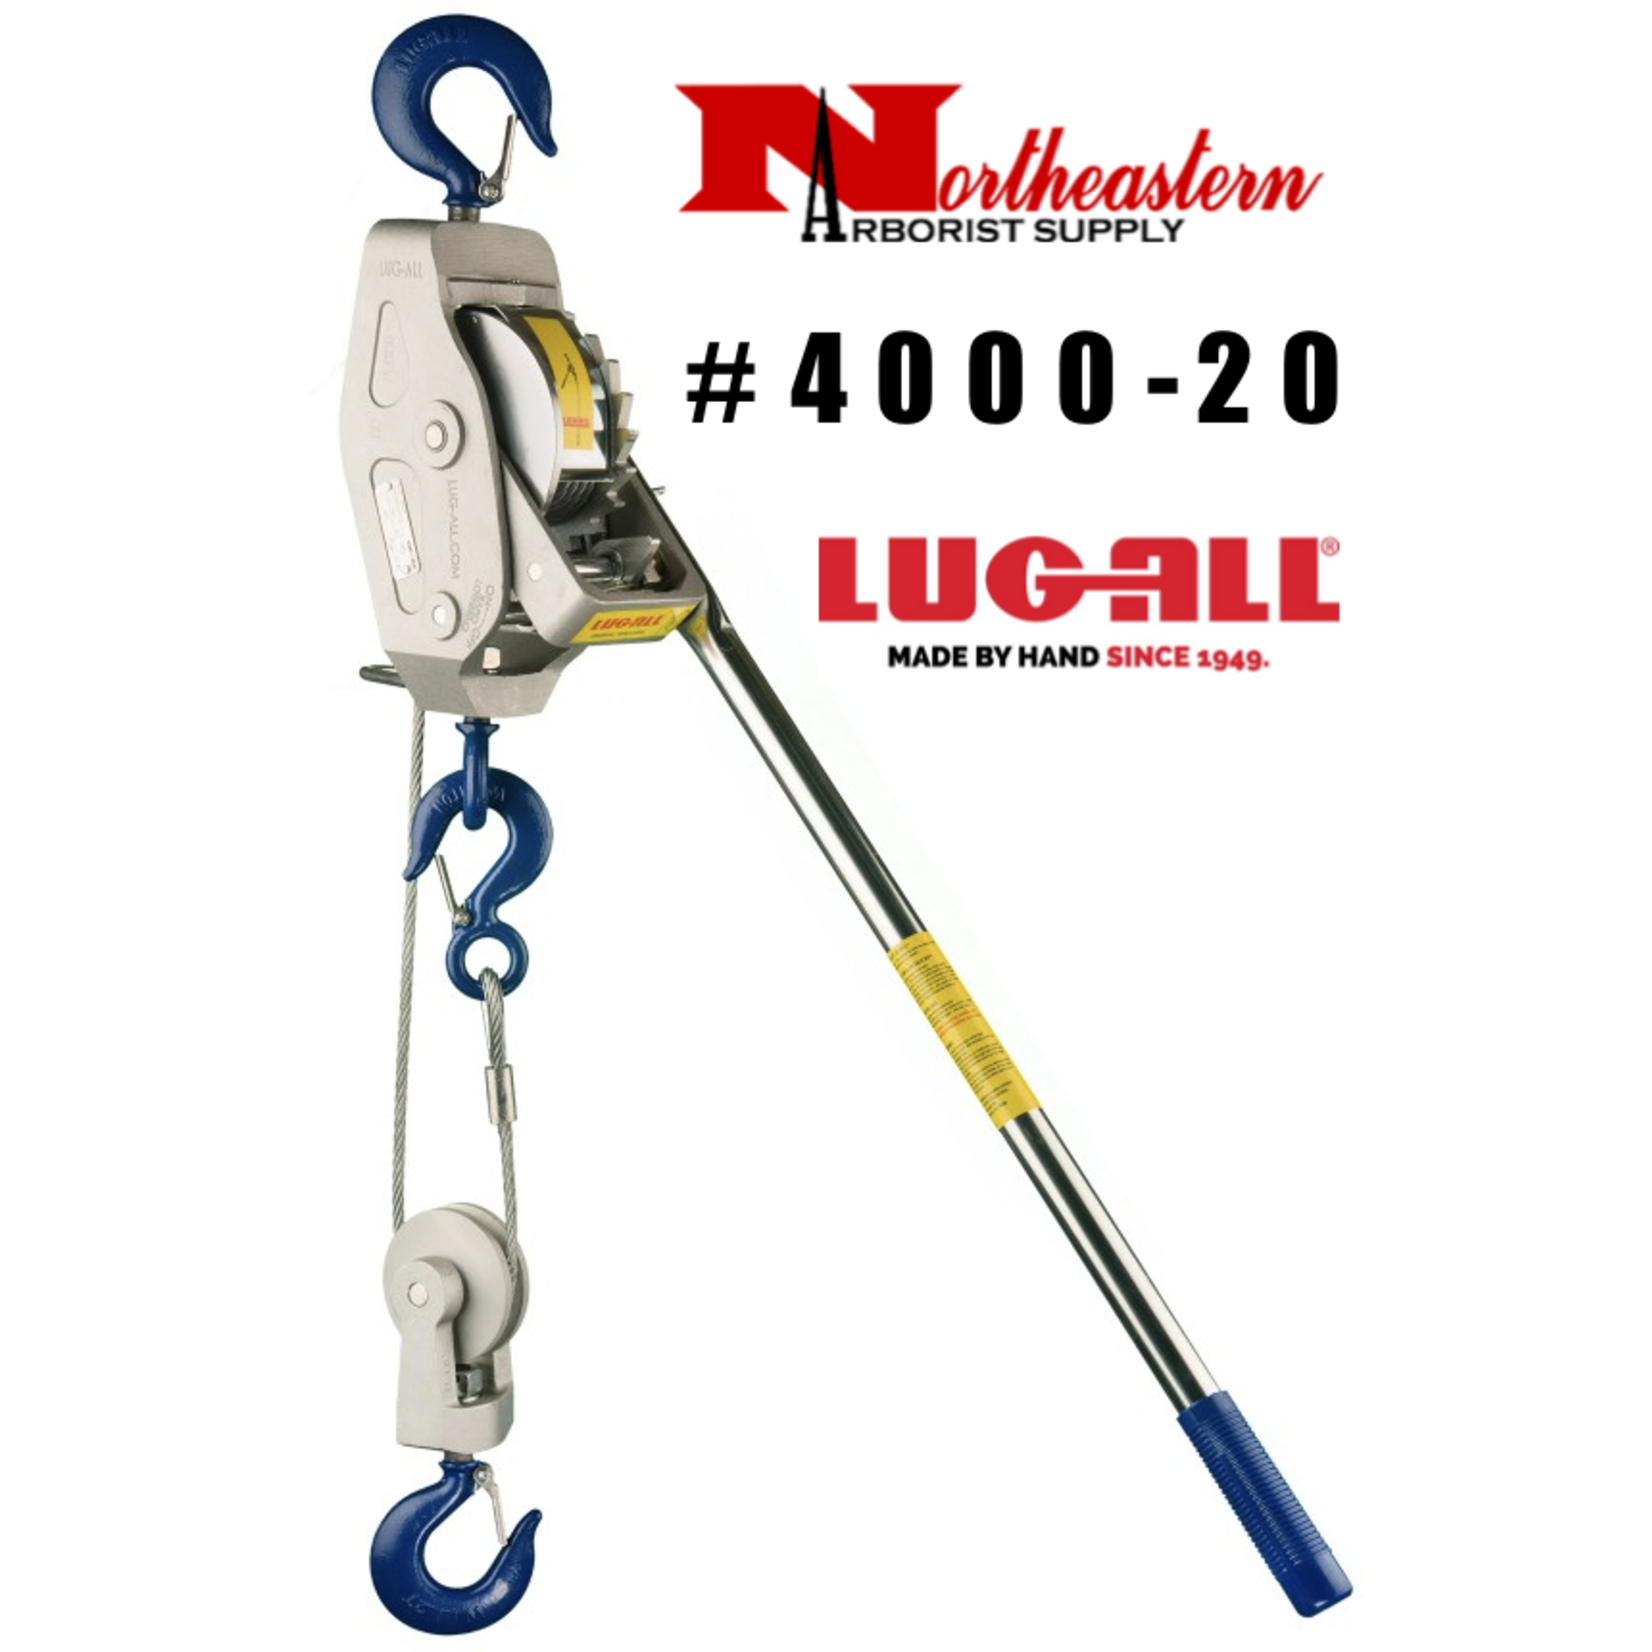 LUG-ALL Lug-All Model 4000-20, 2 Ton Cable Hoist